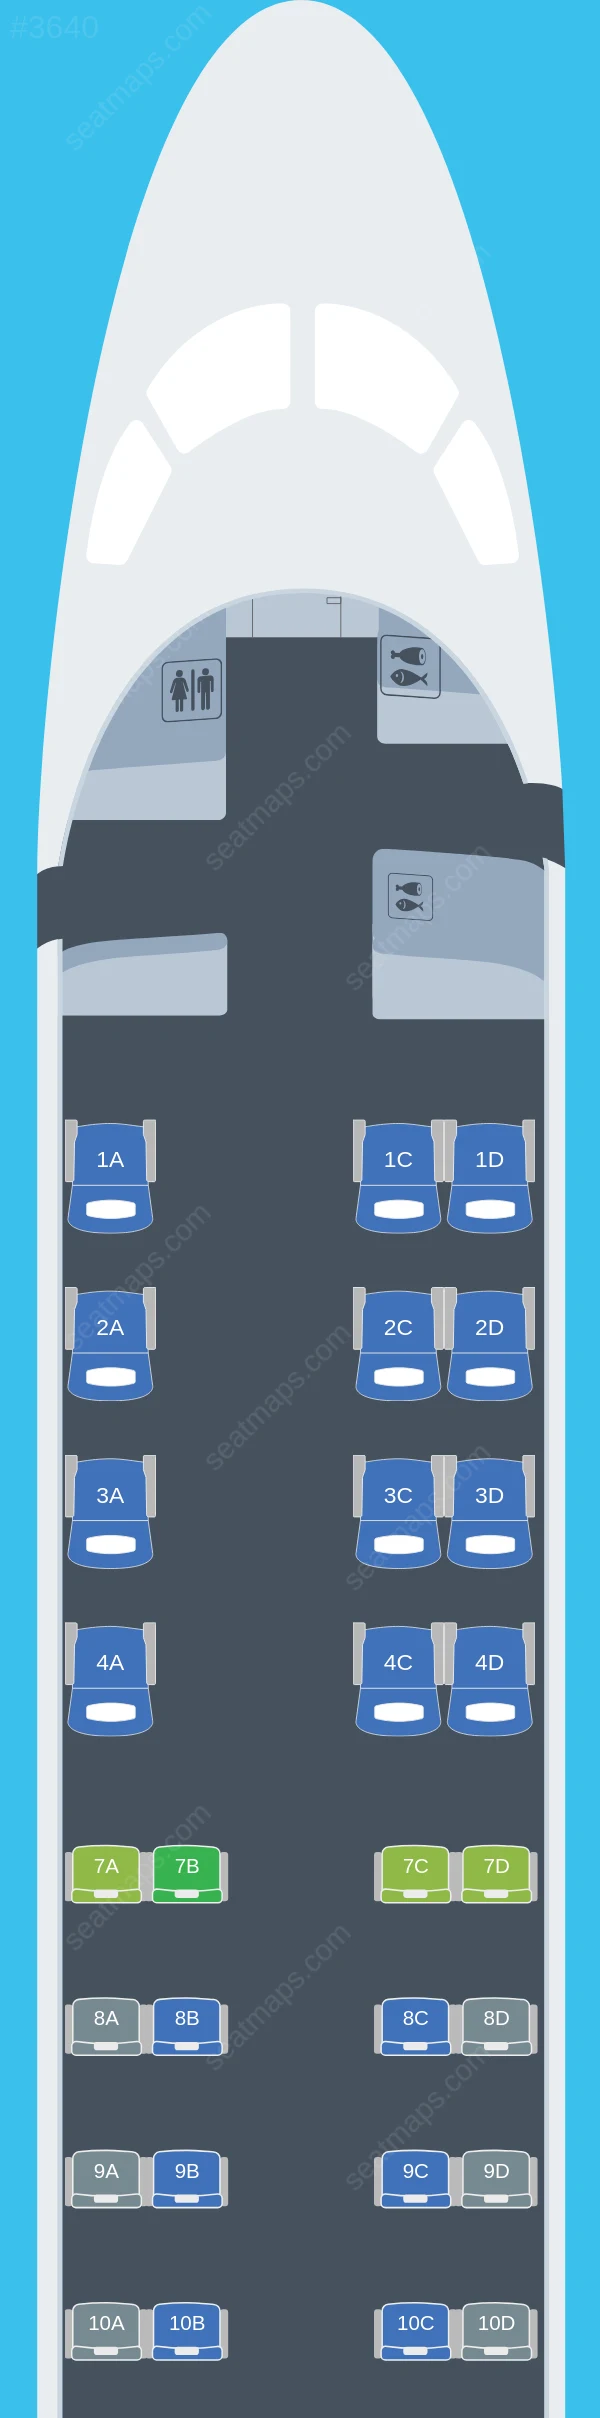 United Embraer E175 V.1 seatmap preview